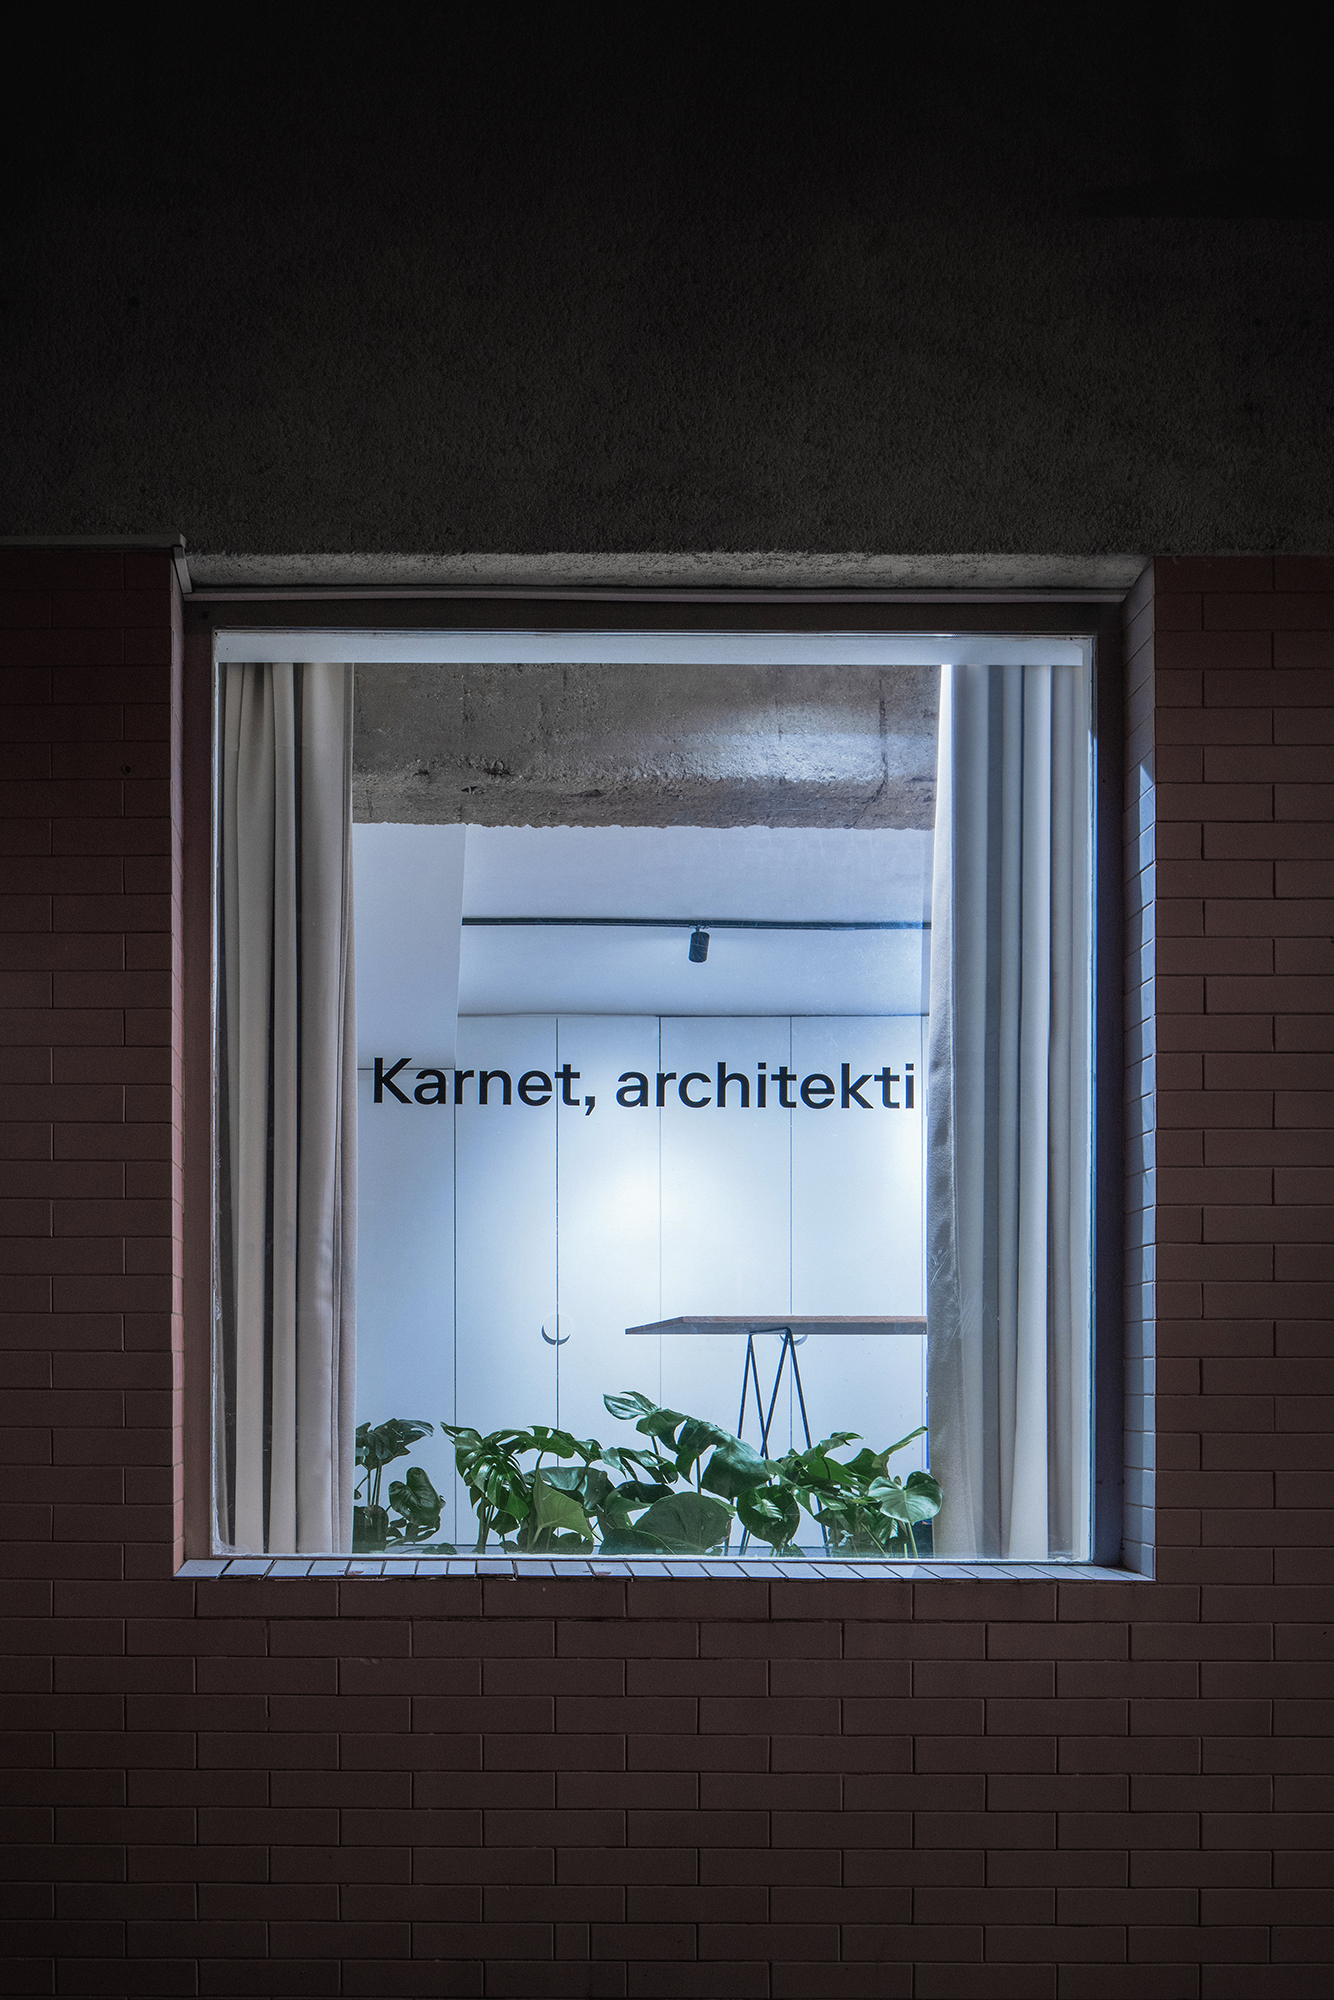 Karnet, architekti kontakt